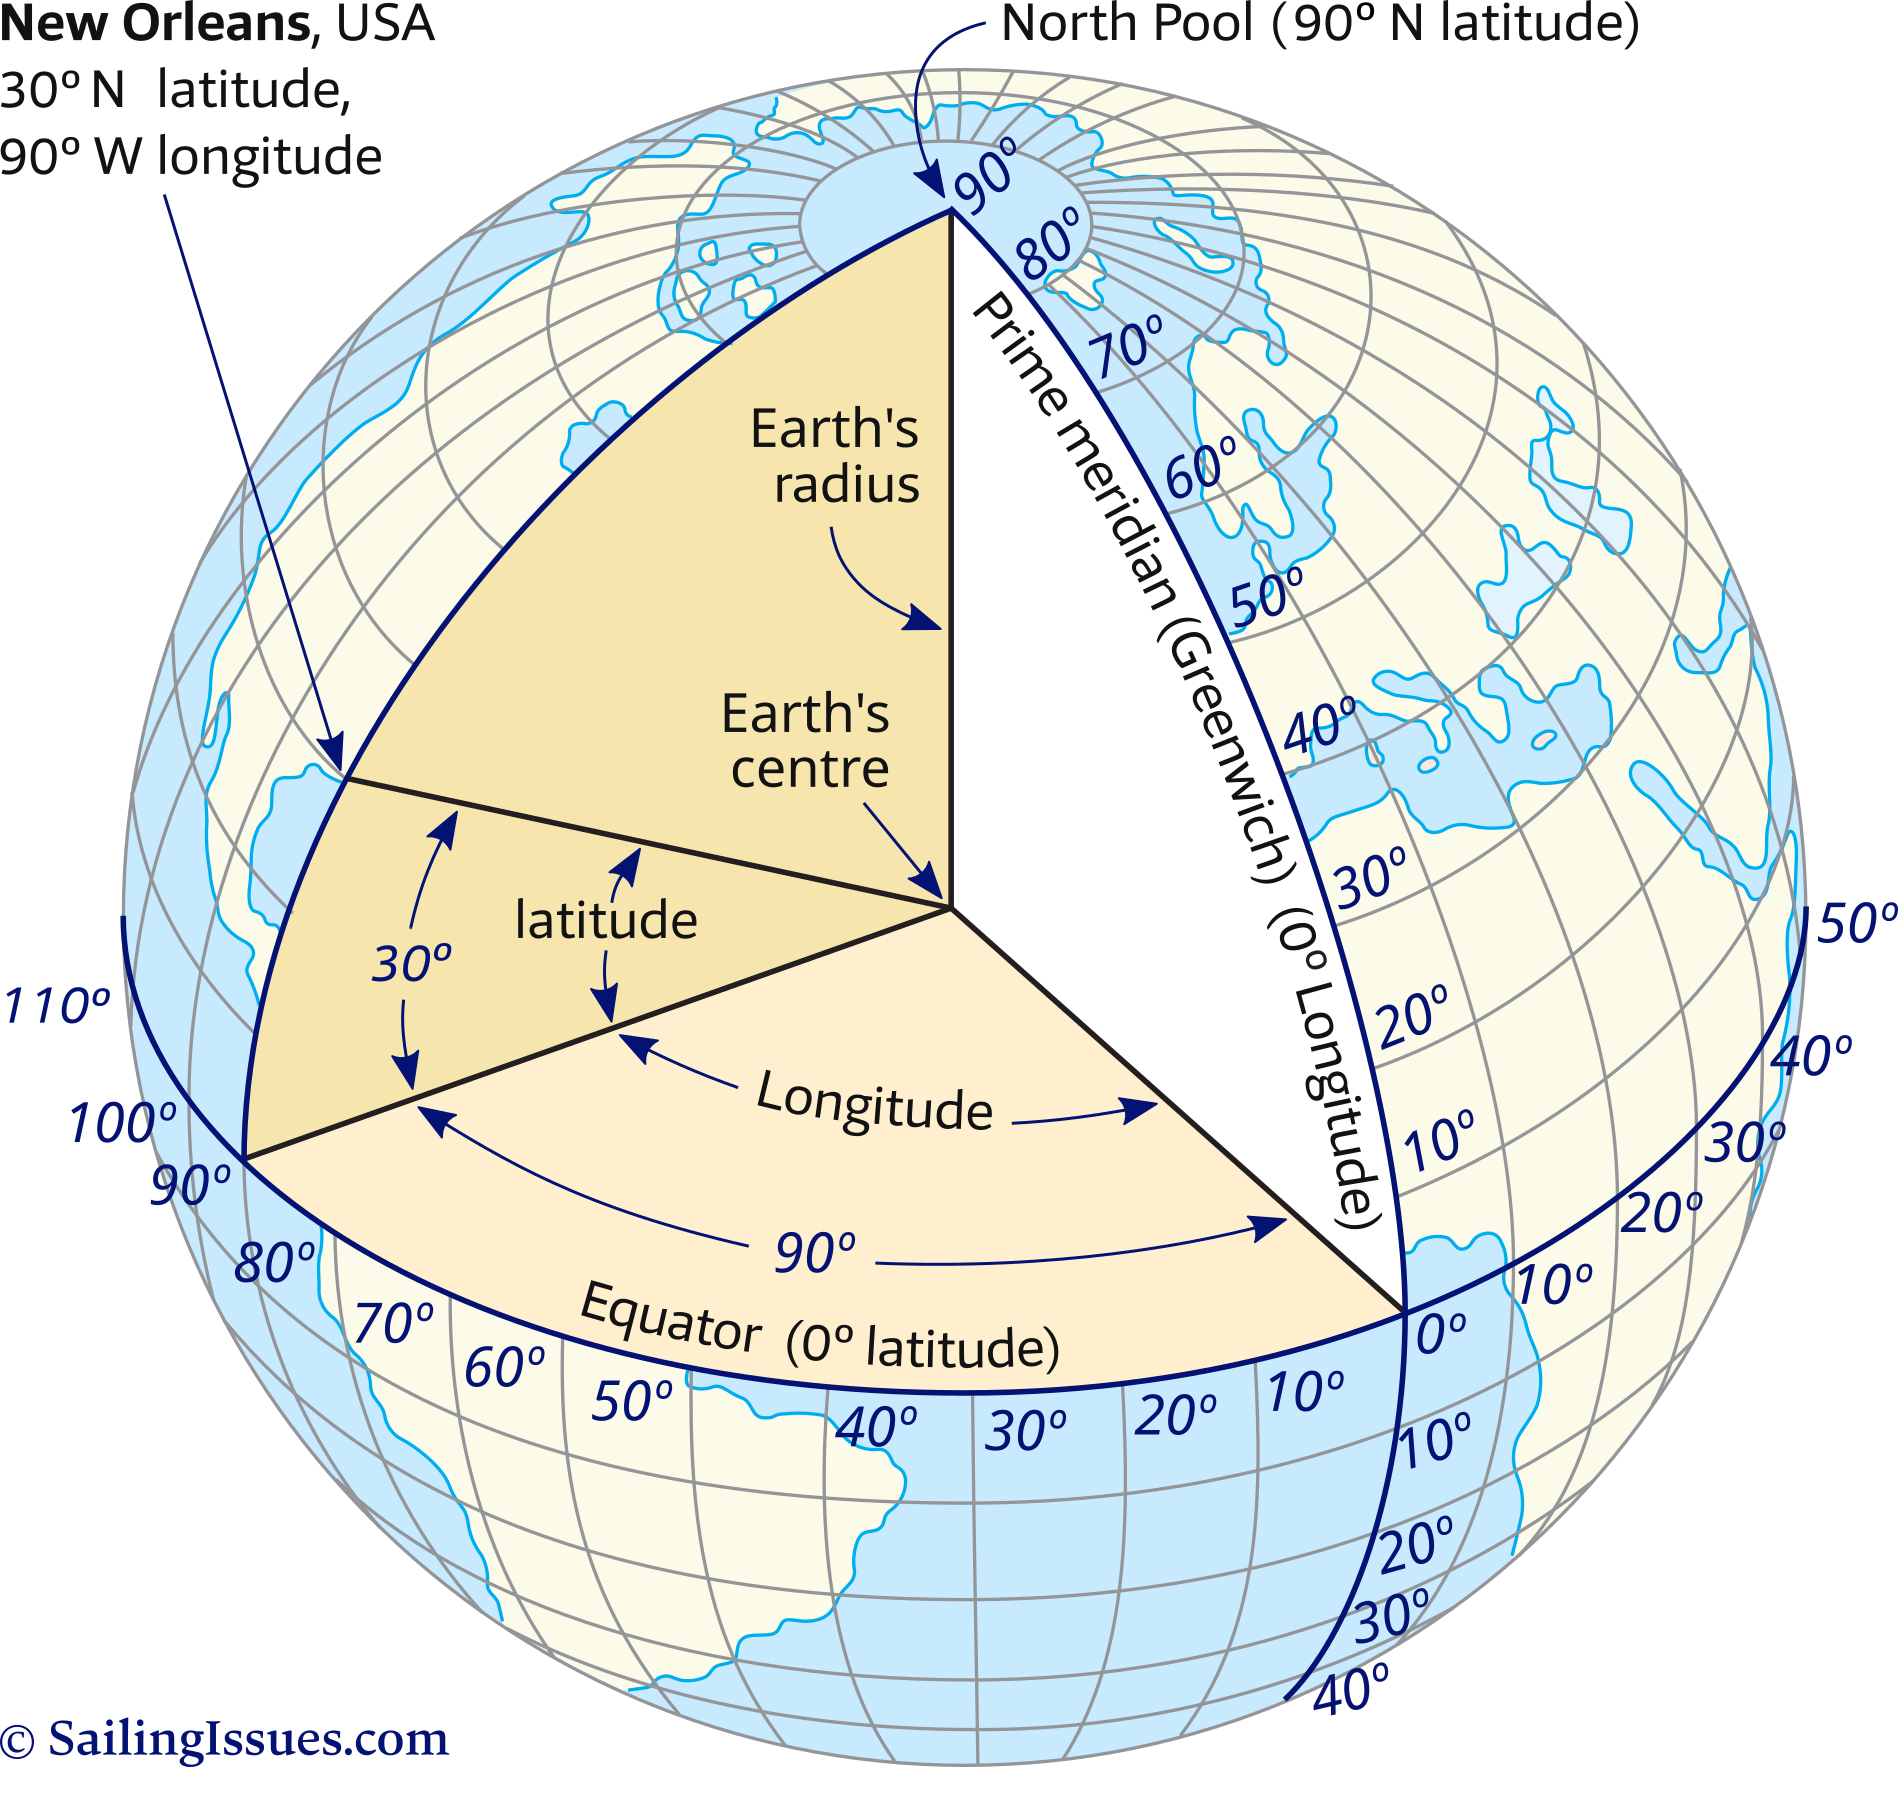 Equator Prime Meridian Longitude And Latitude / The Greenwich Meridian